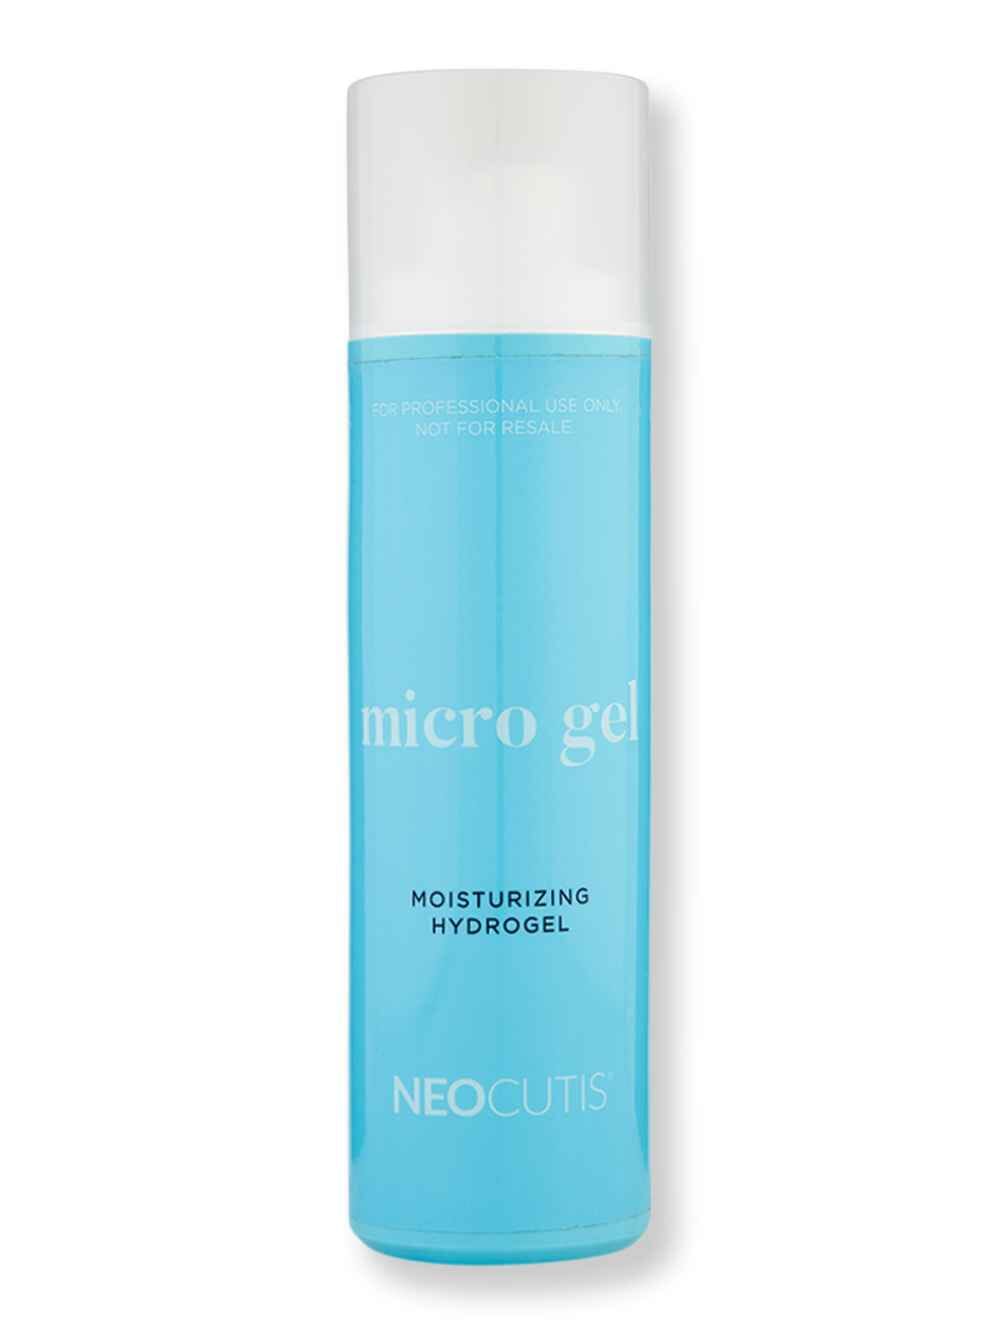 Neocutis Neocutis Micro Gel Moisturizing Hydrogel 200 ml Face Moisturizers 